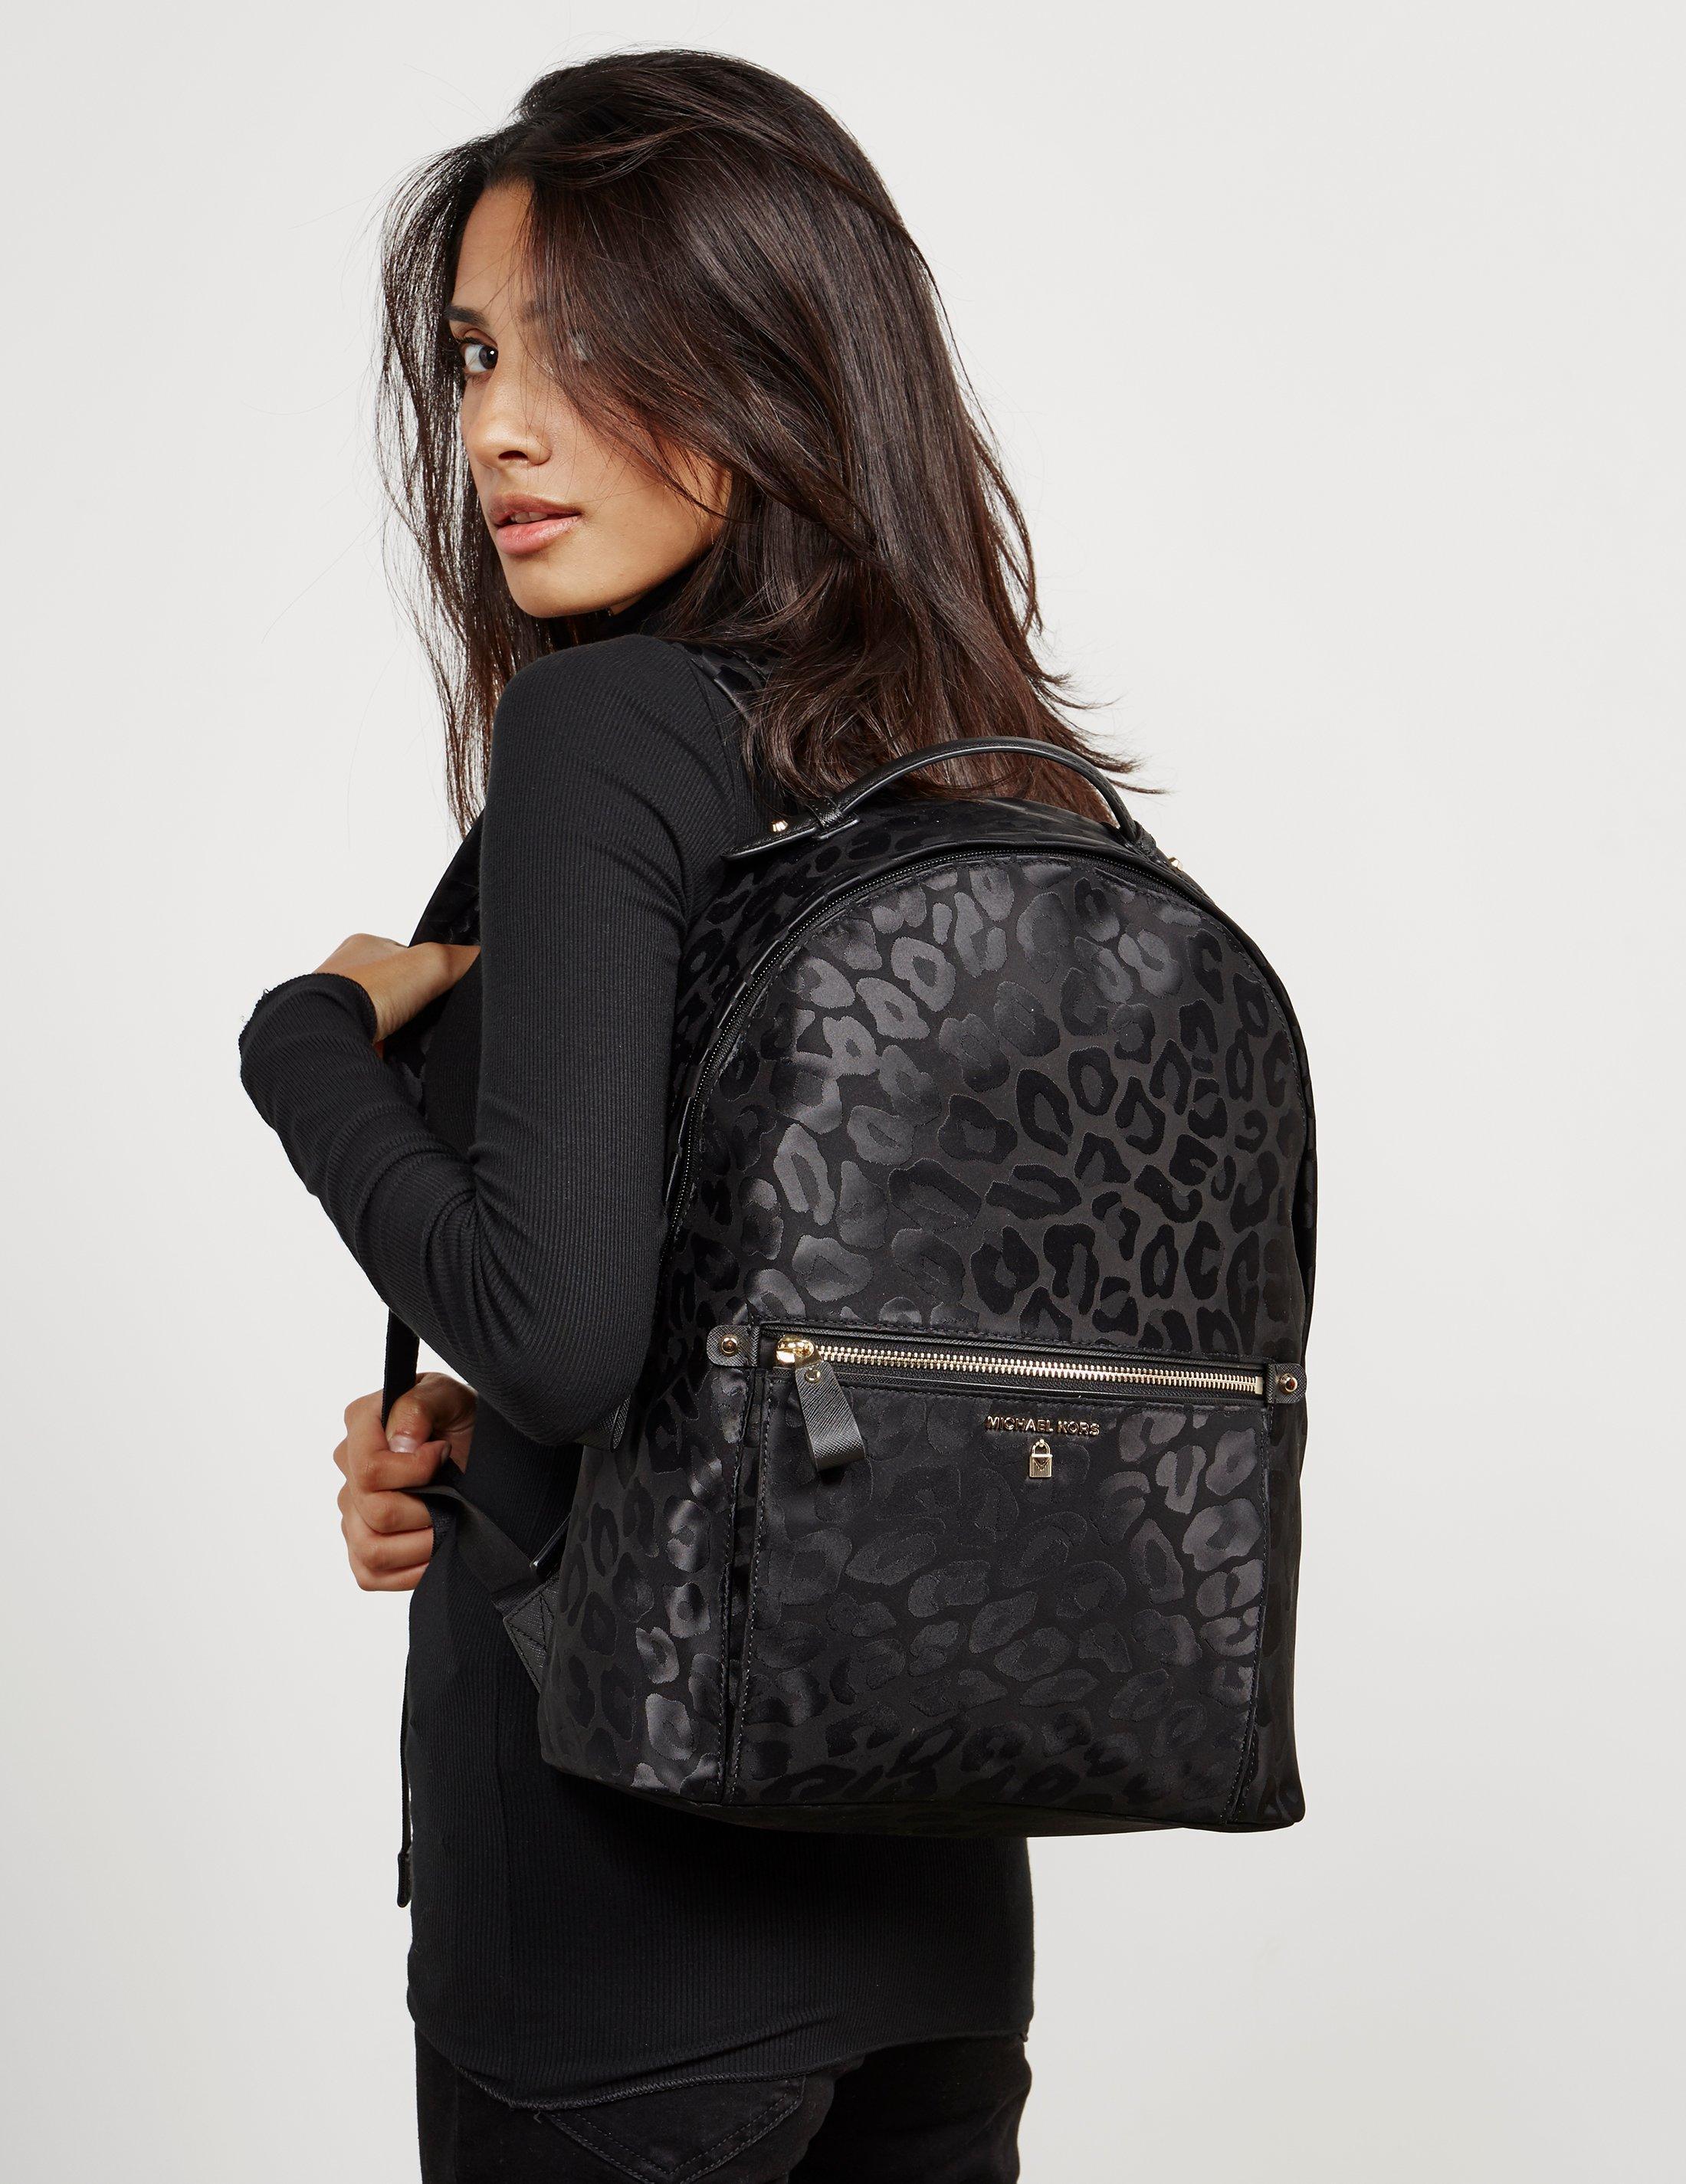 michael kors black leopard backpack